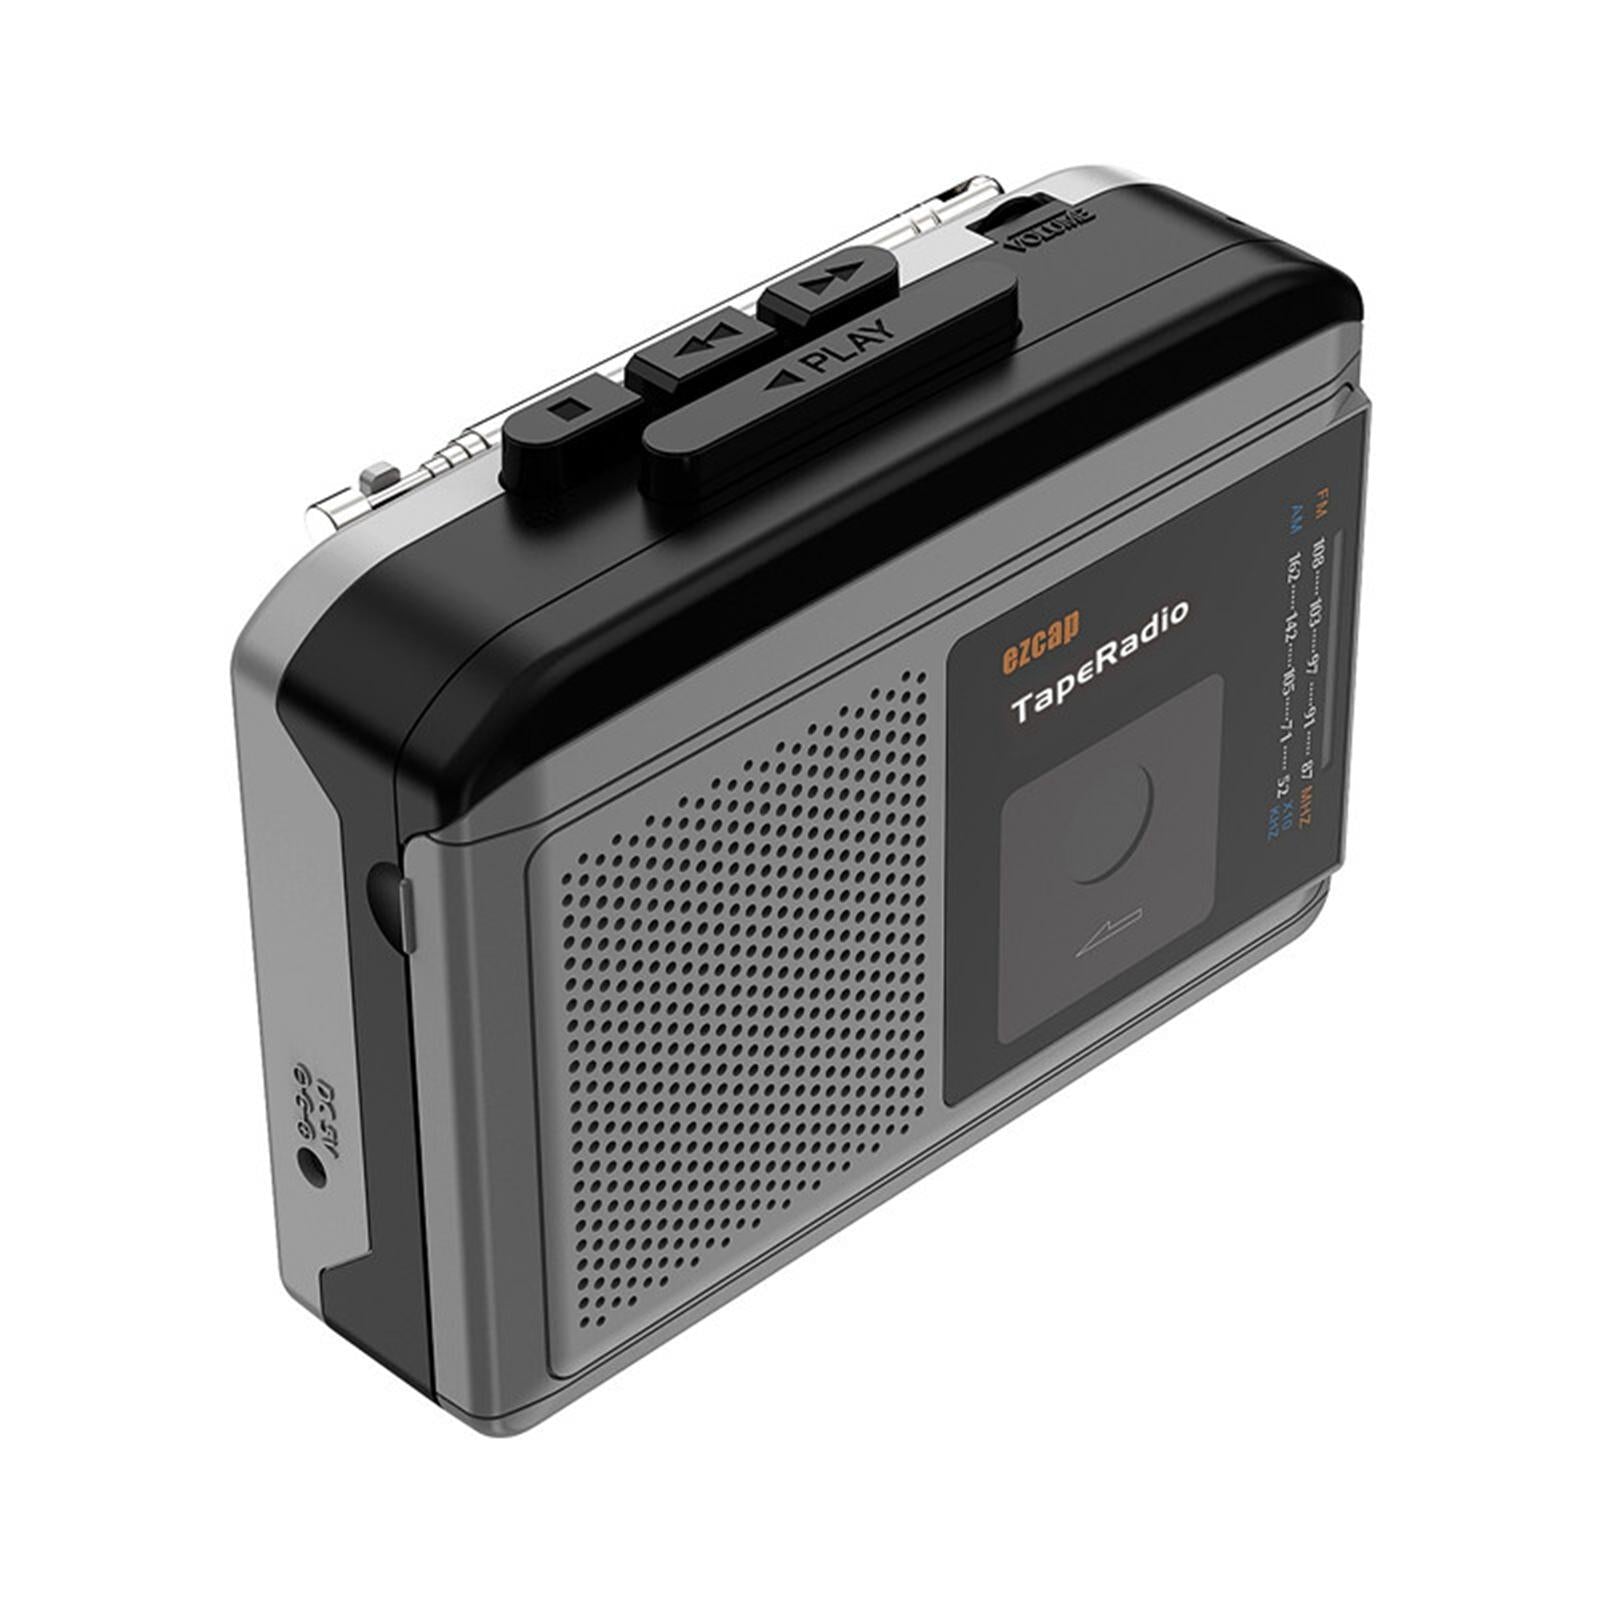 Cassette Player Portable Compact Music Personal Radio Lightweight Converter